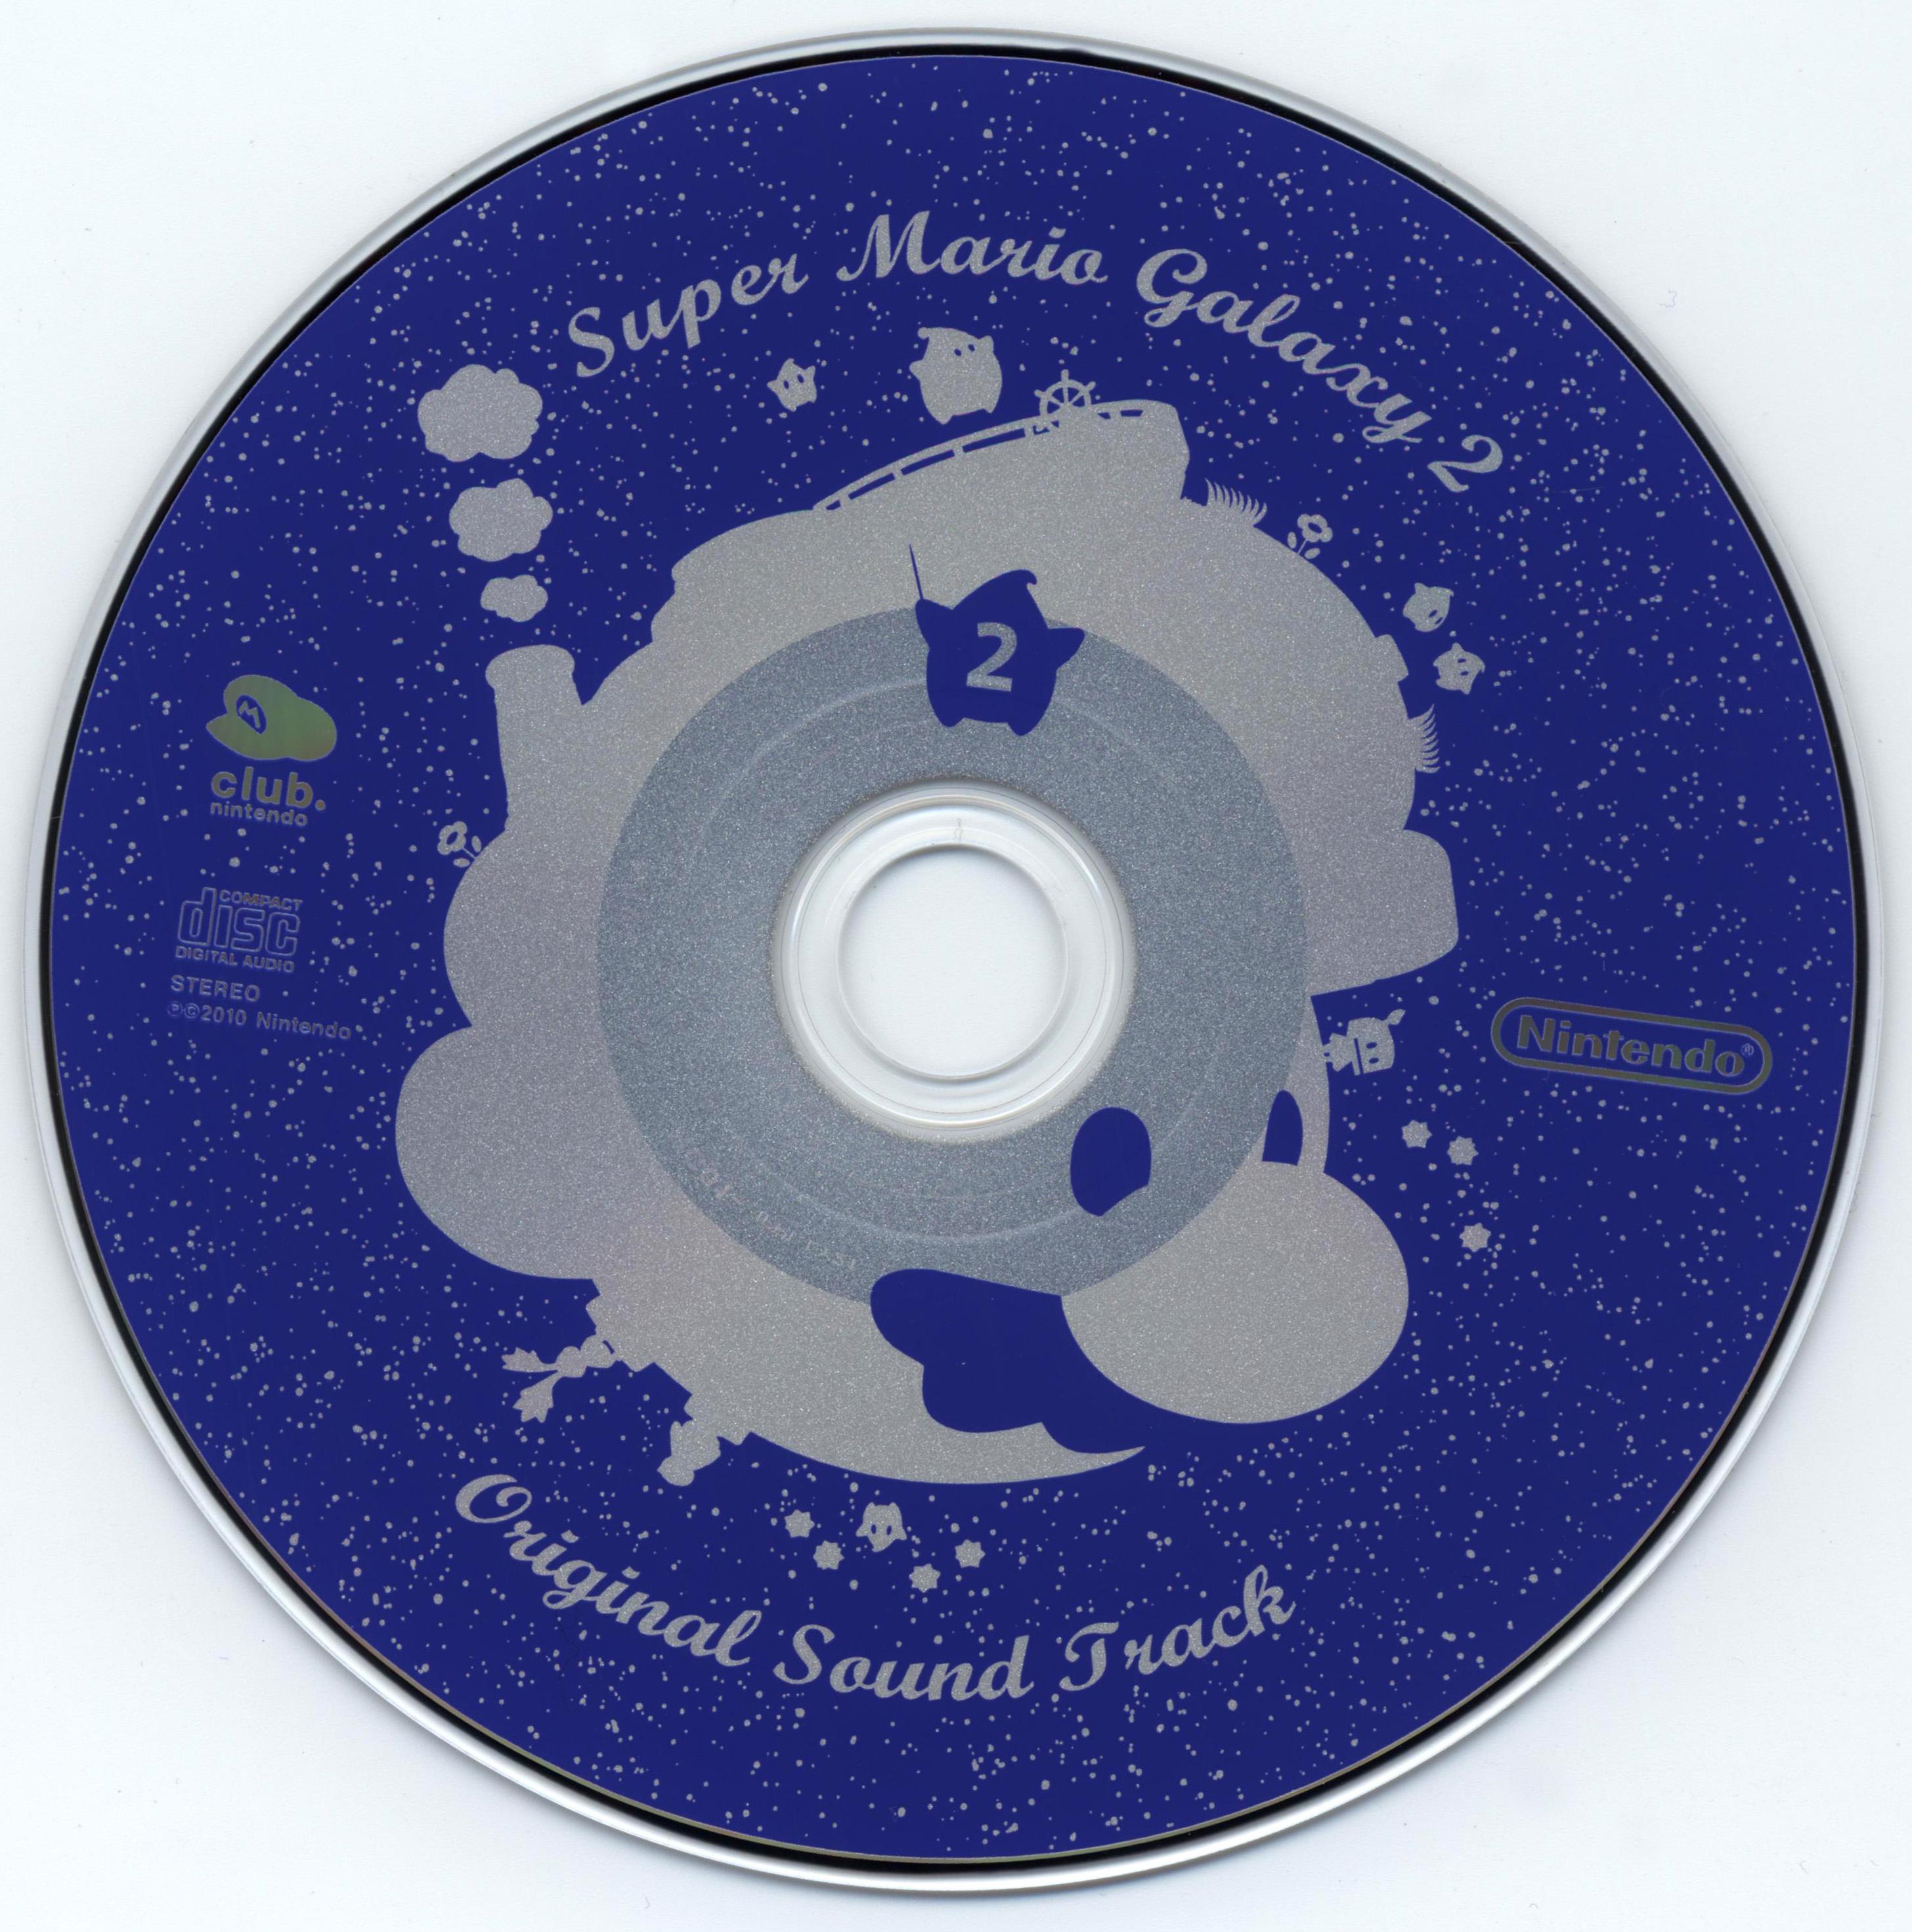 Super Mario Galaxy 2 Original Sound Track музыка из игры